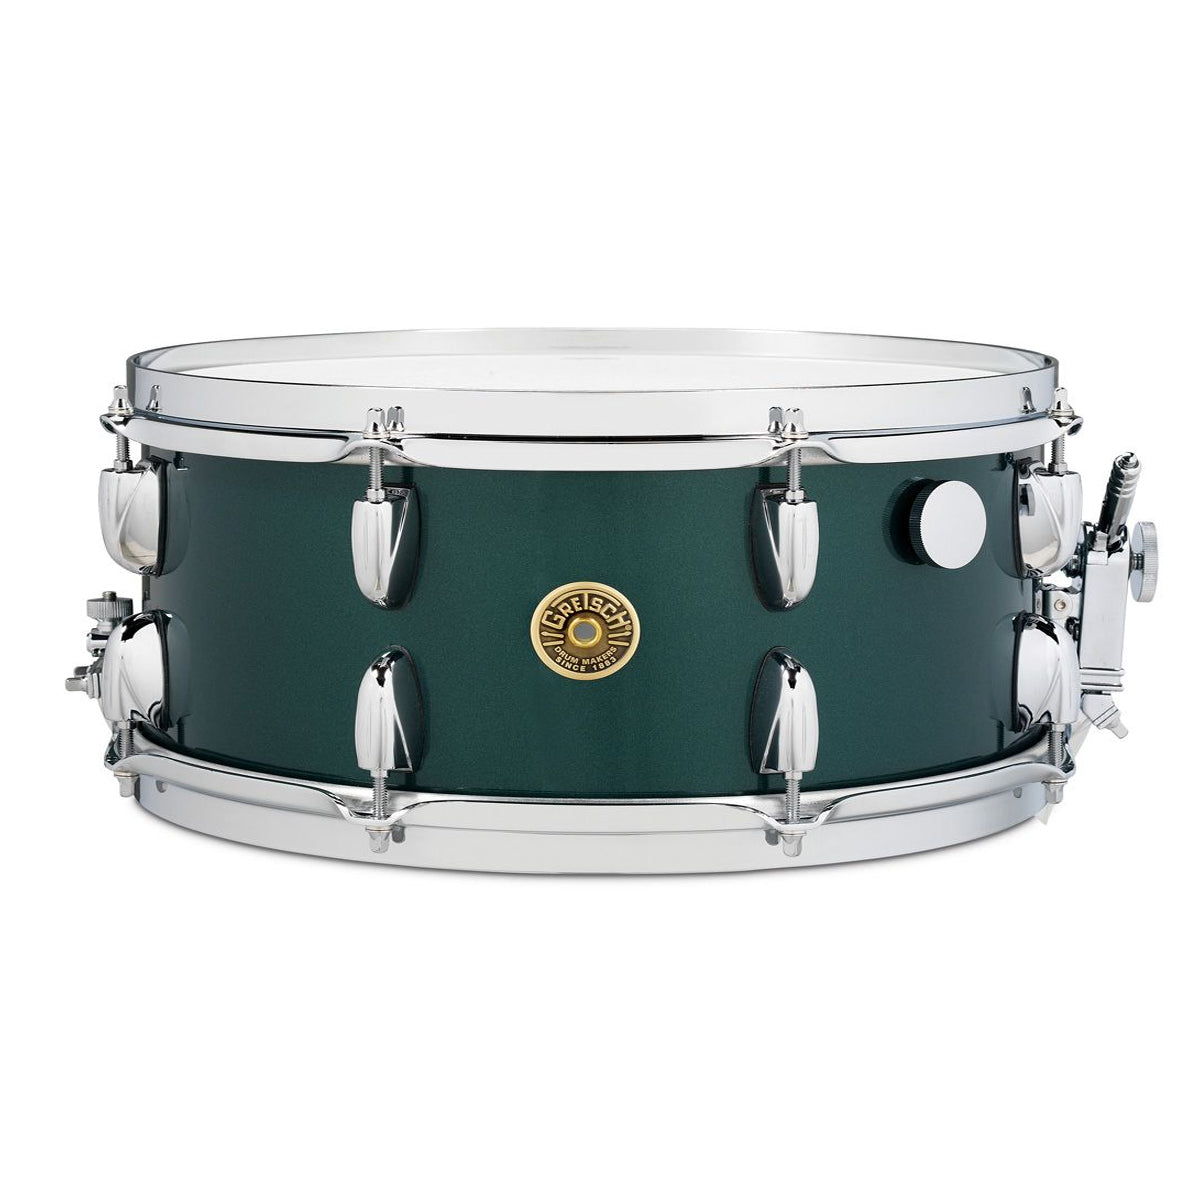 Gretsch USA Steve Ferrone Signature 14"x6.5" Snare Drum in Cadillac Green Gloss